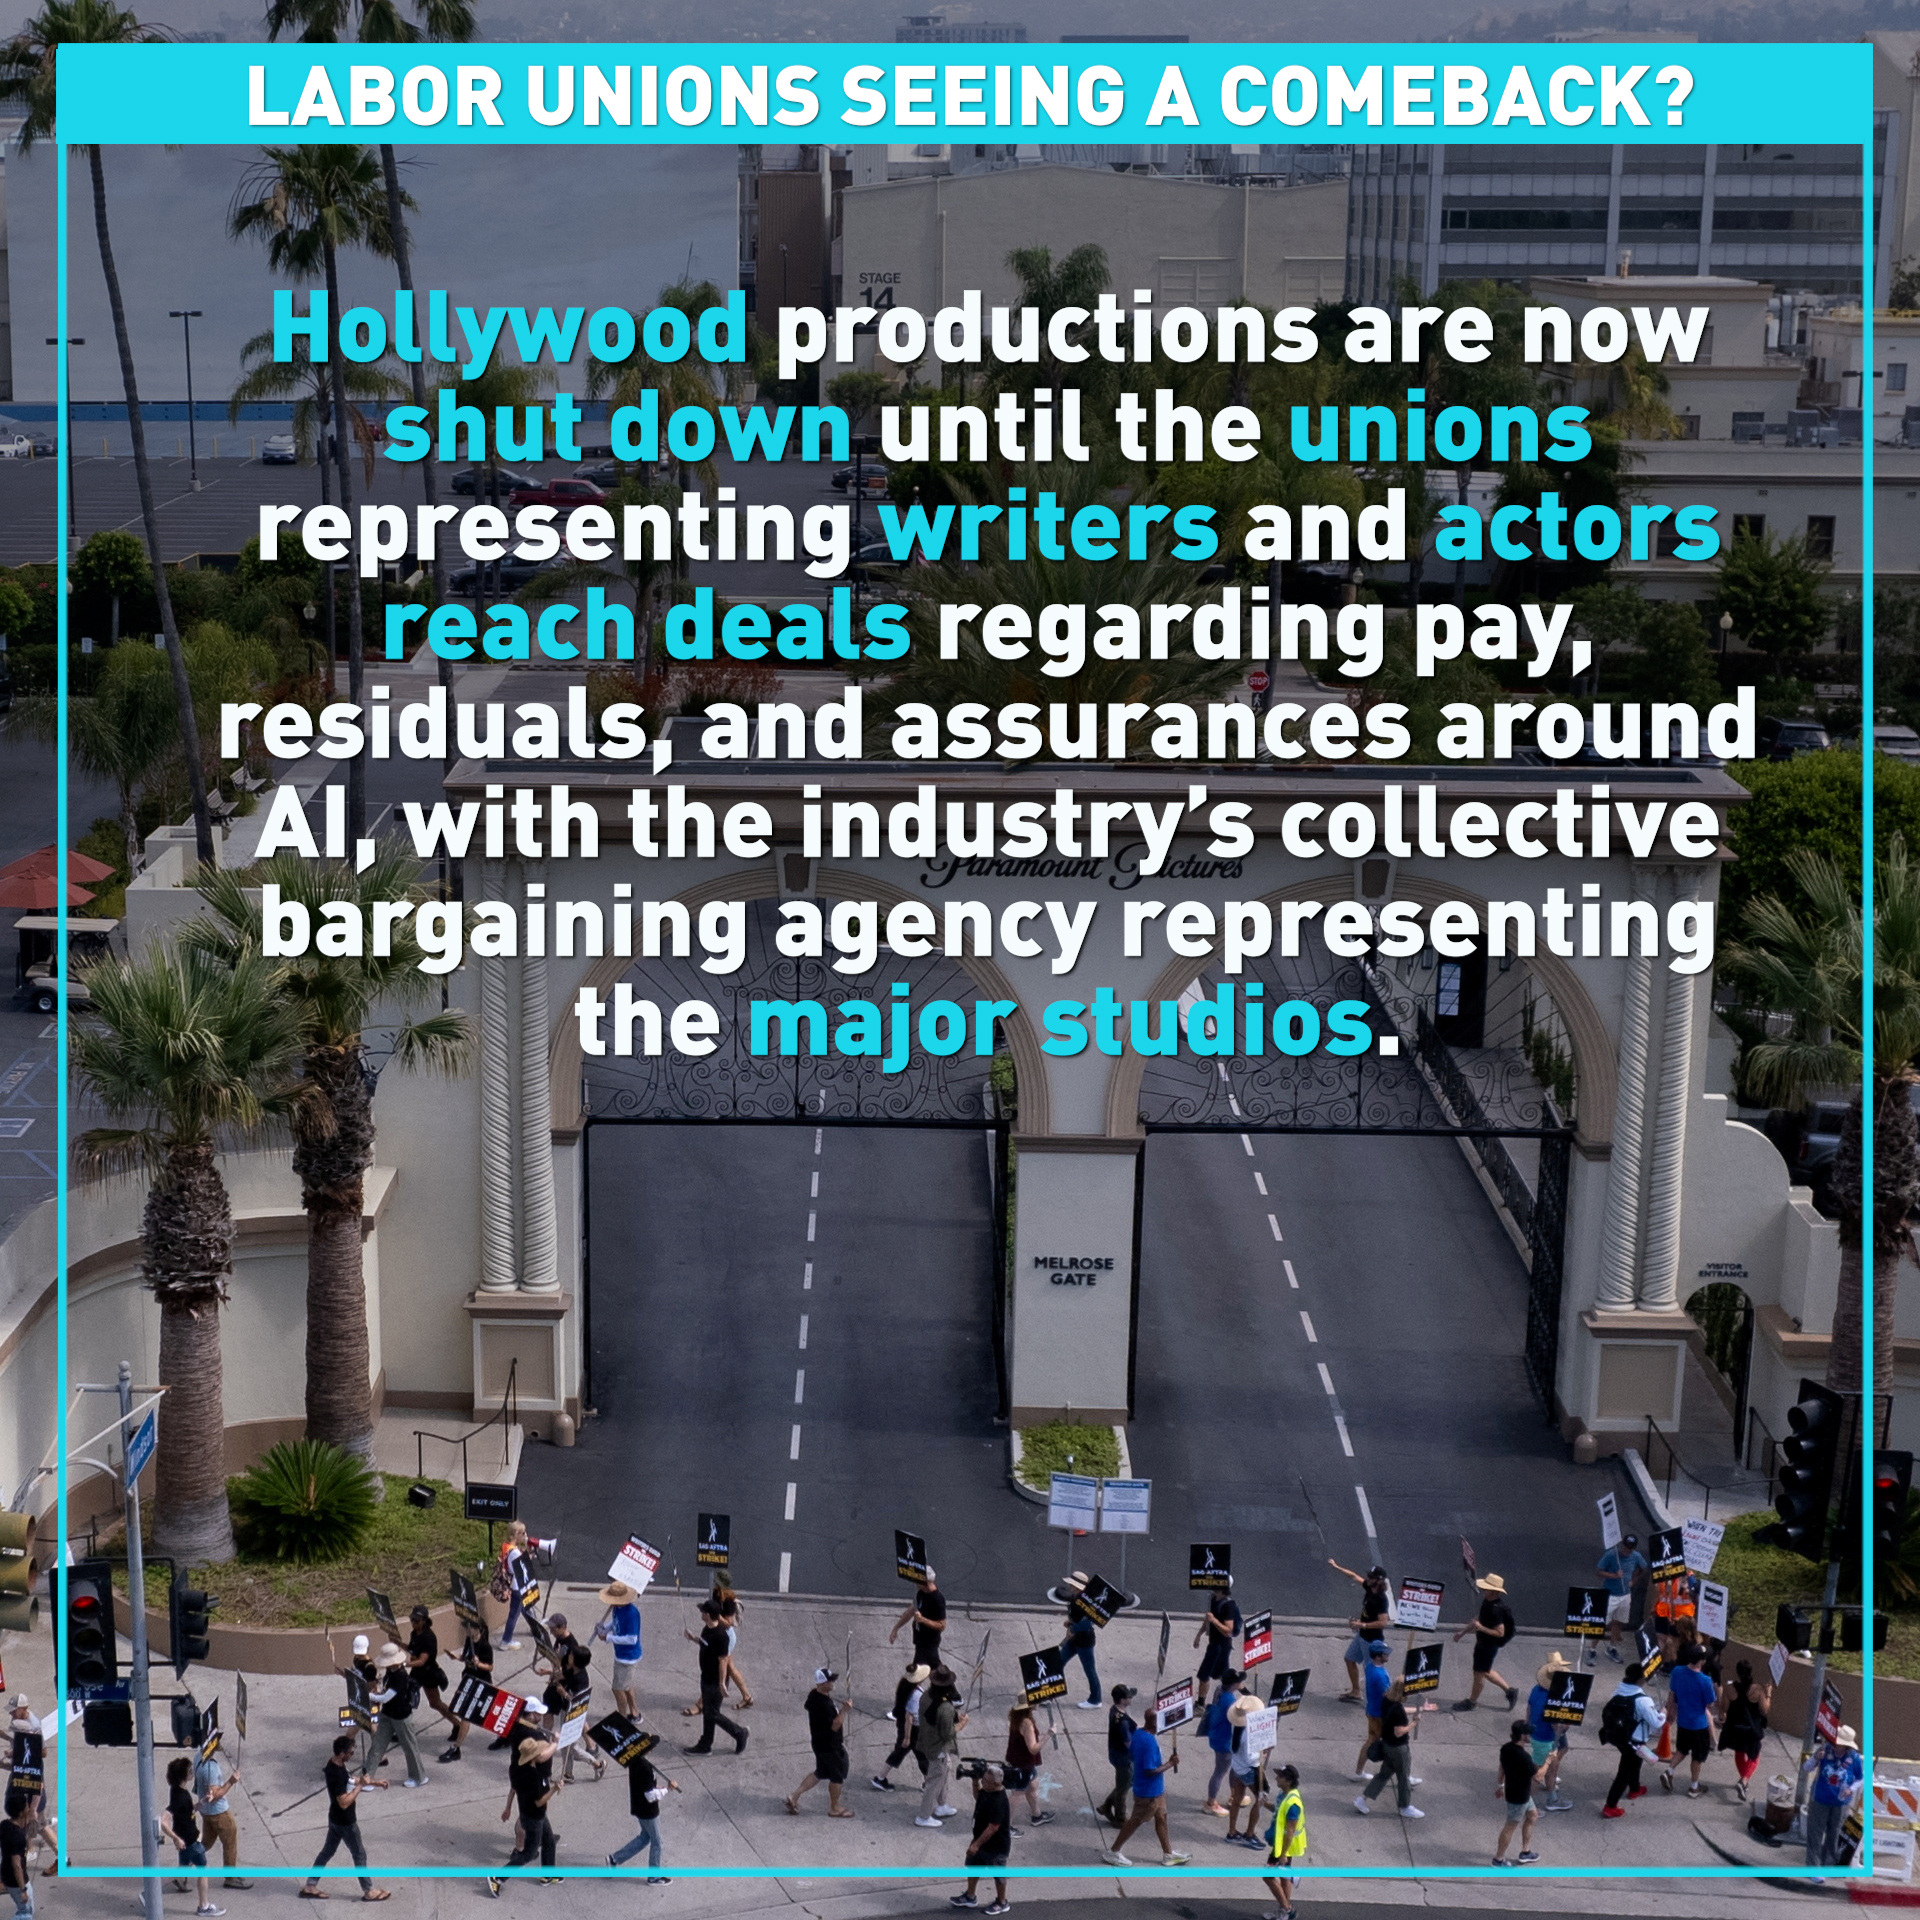 Are labor unions making a comeback in the United States? 